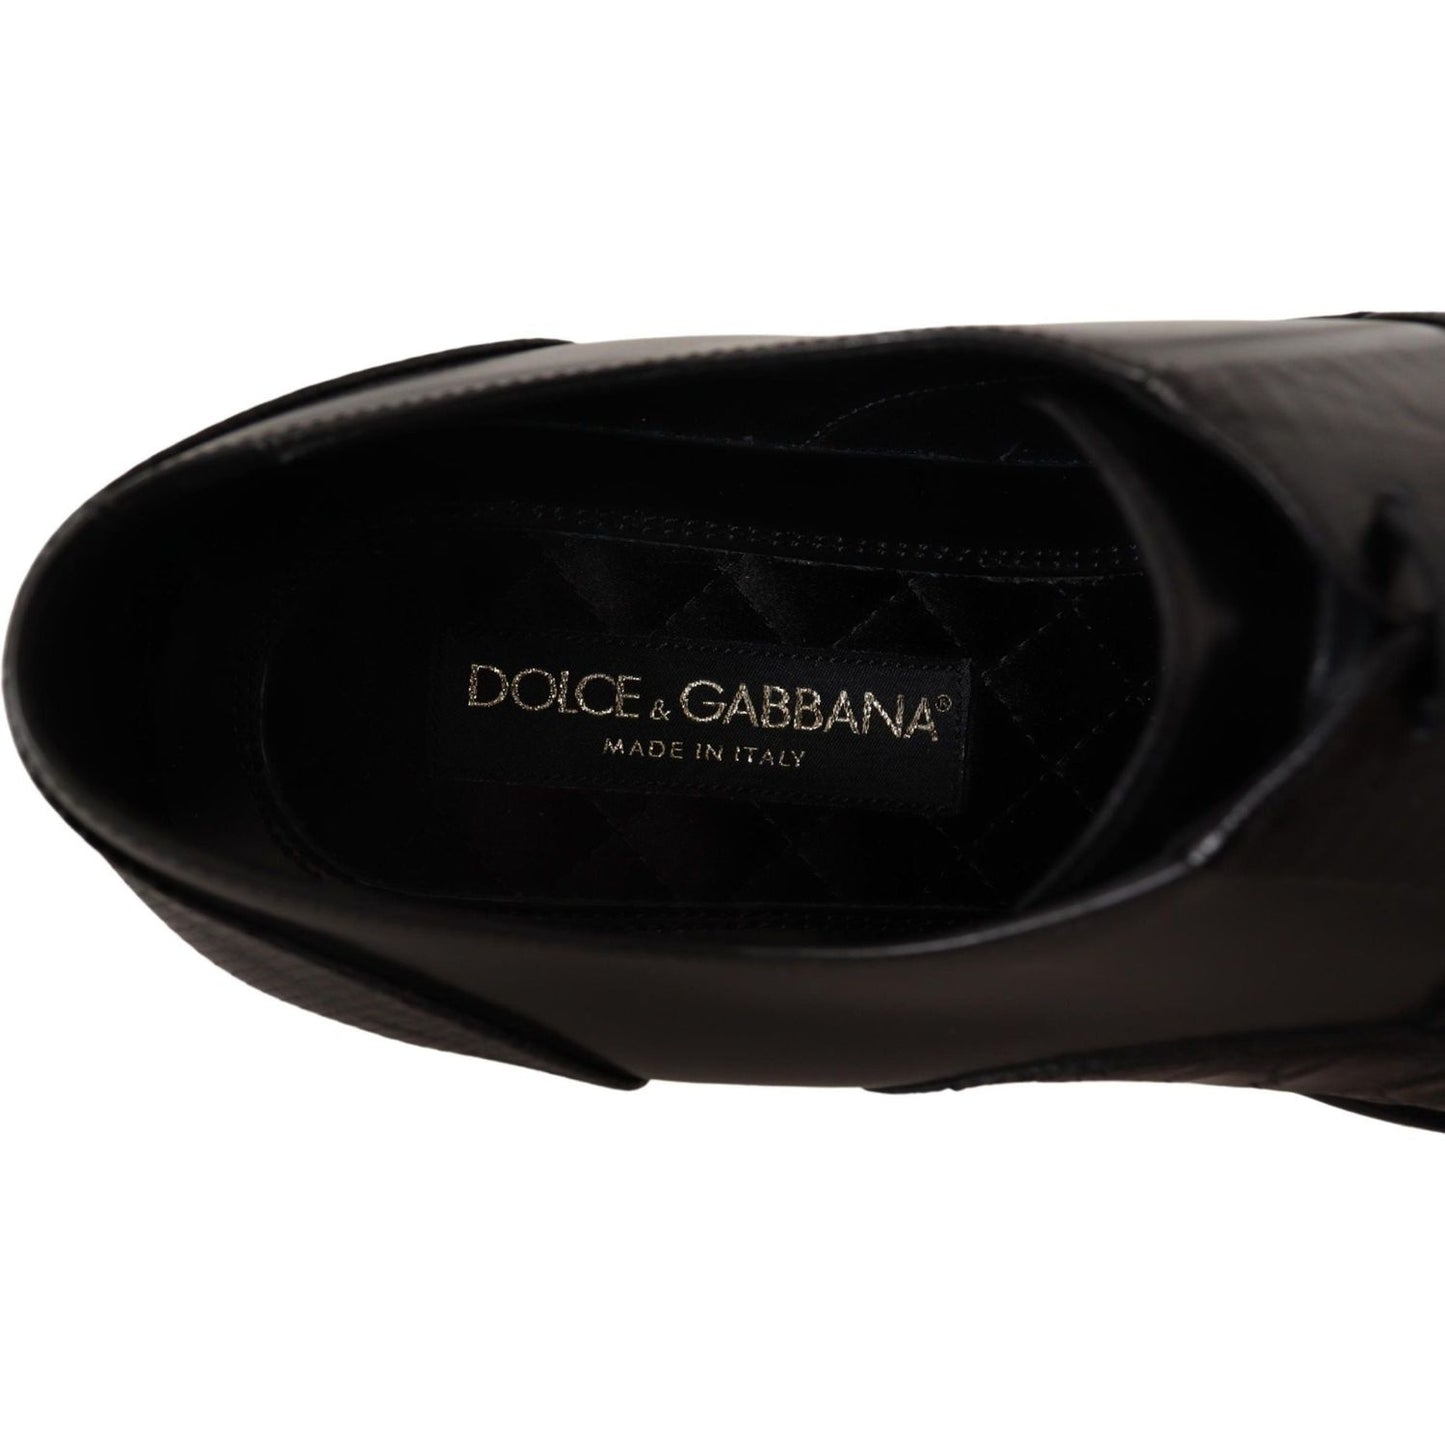 Dolce & Gabbana Elegant Black Derby Oxford Wingtips black-leather-exotic-skins-formal-shoes IMG_5315-scaled-24aa0de1-151.jpg